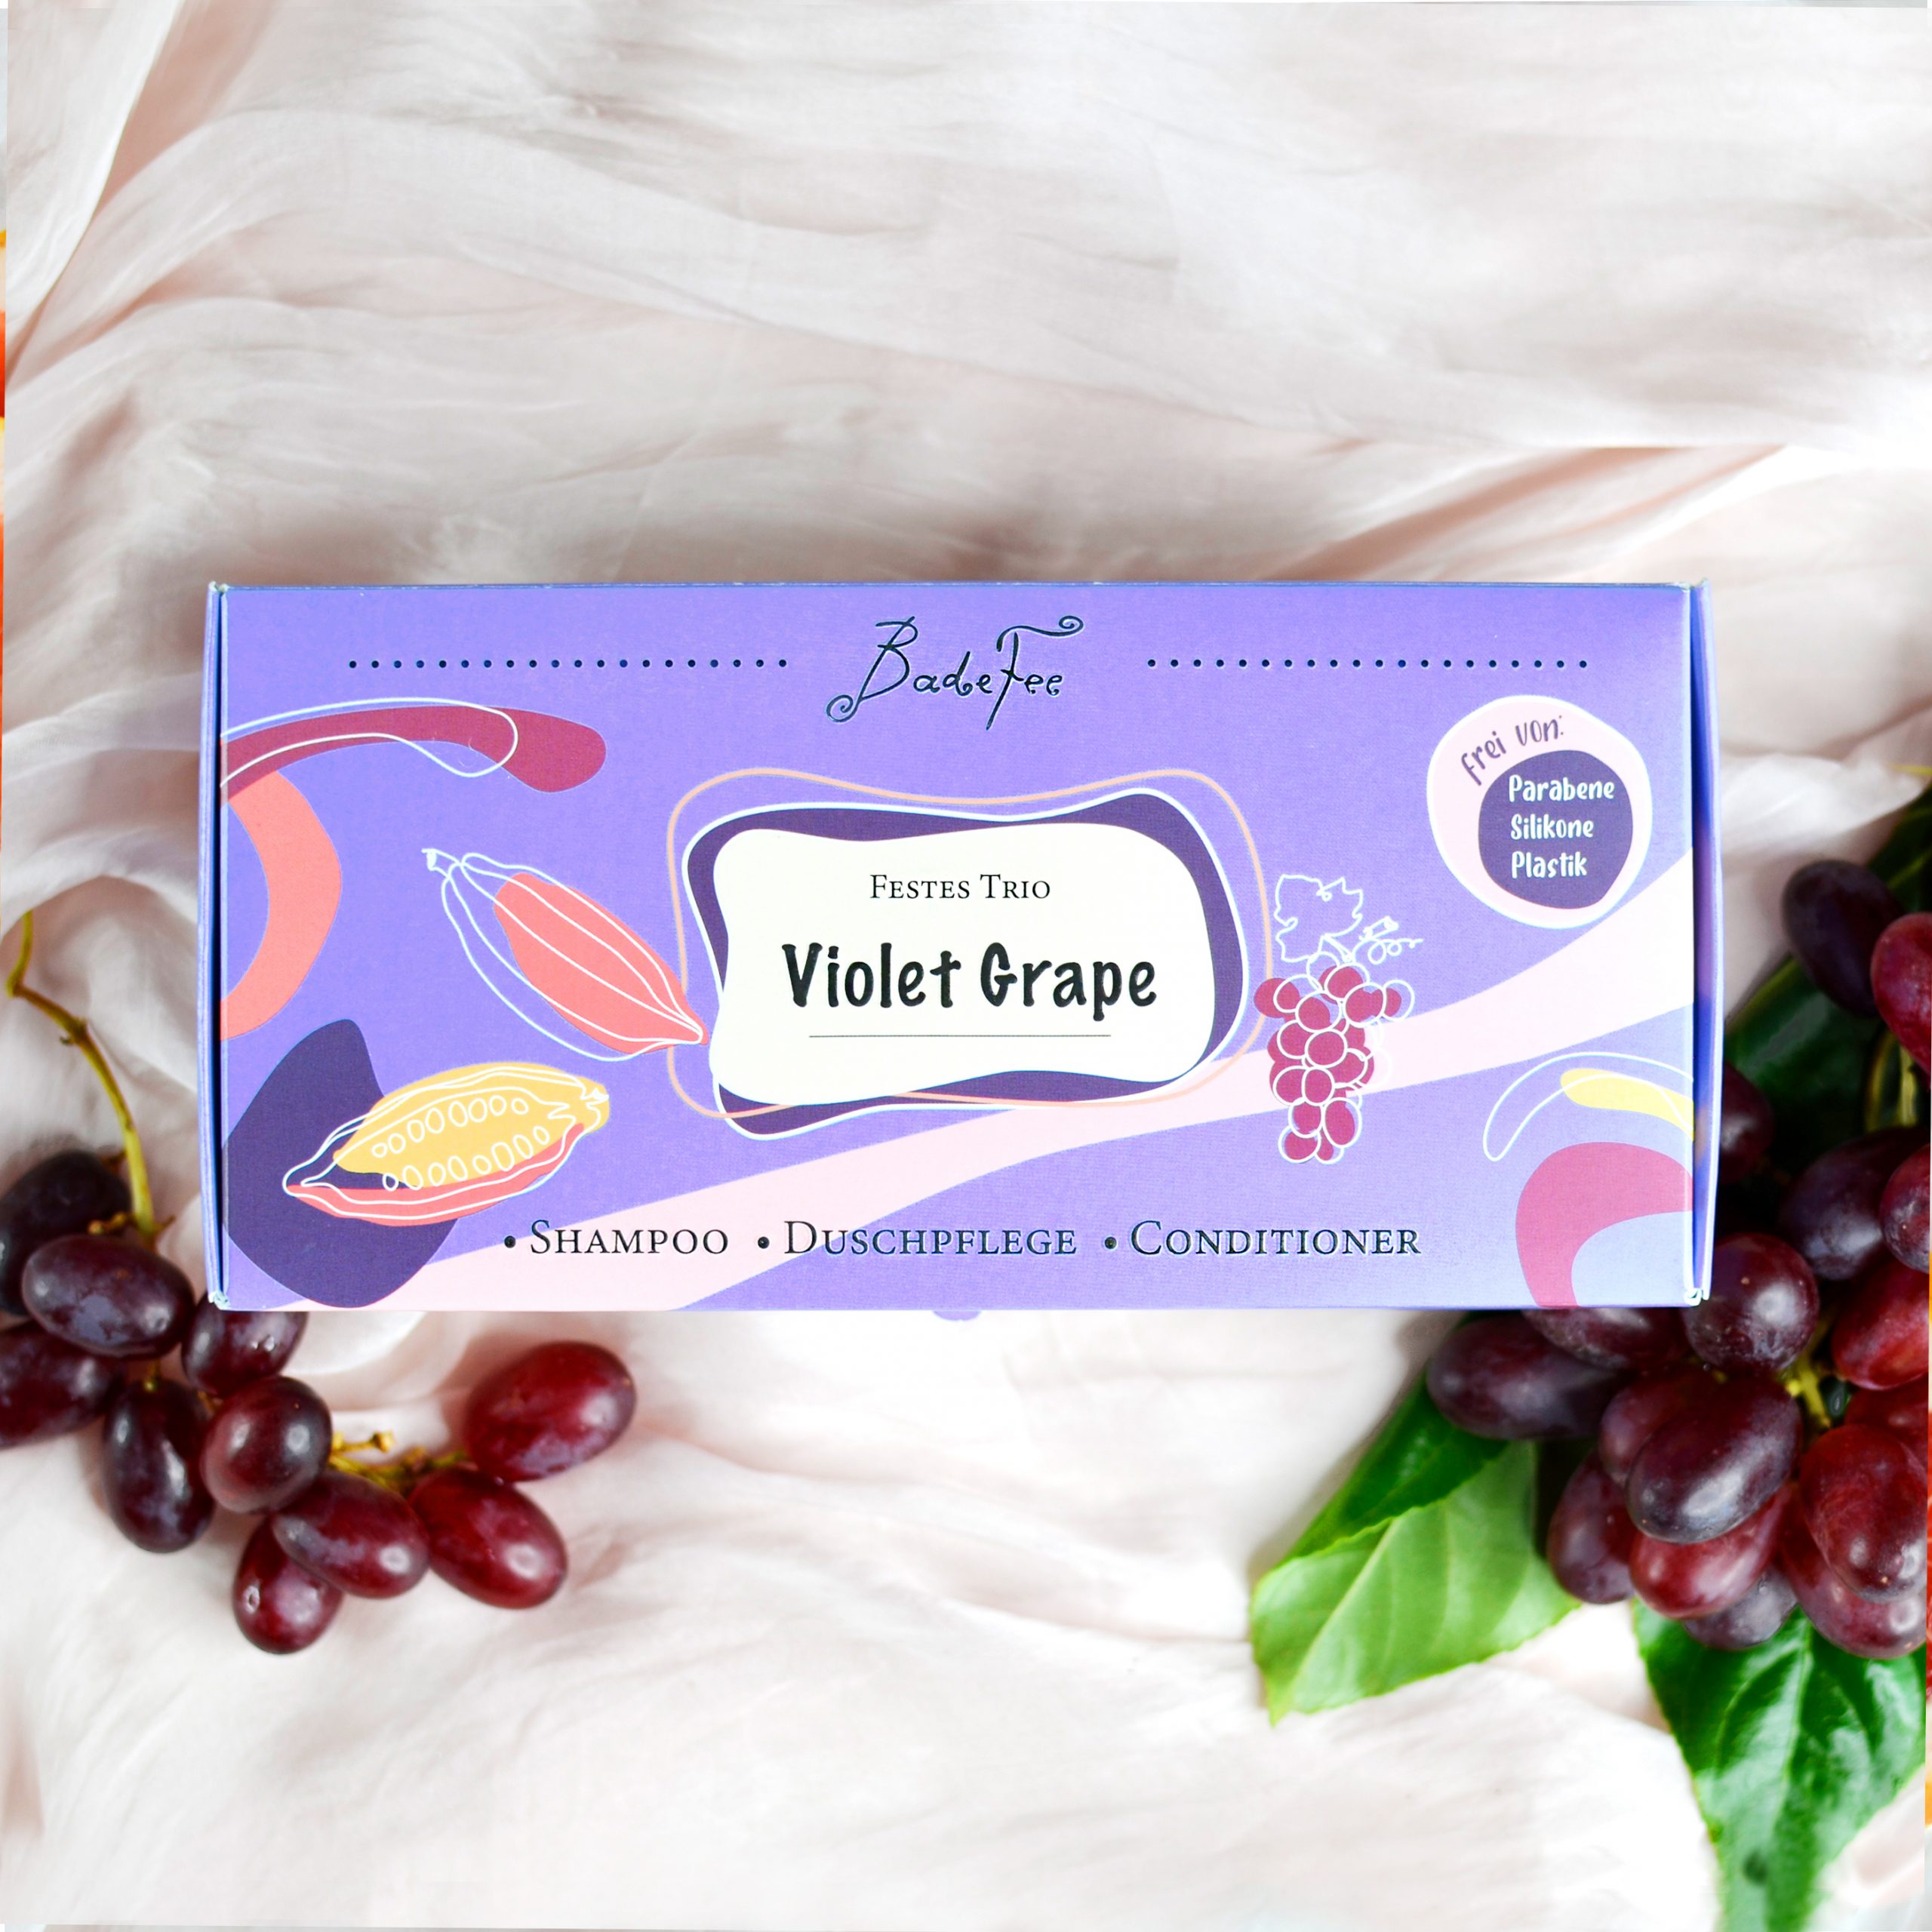 VioletGrape feste pflege badefee 2